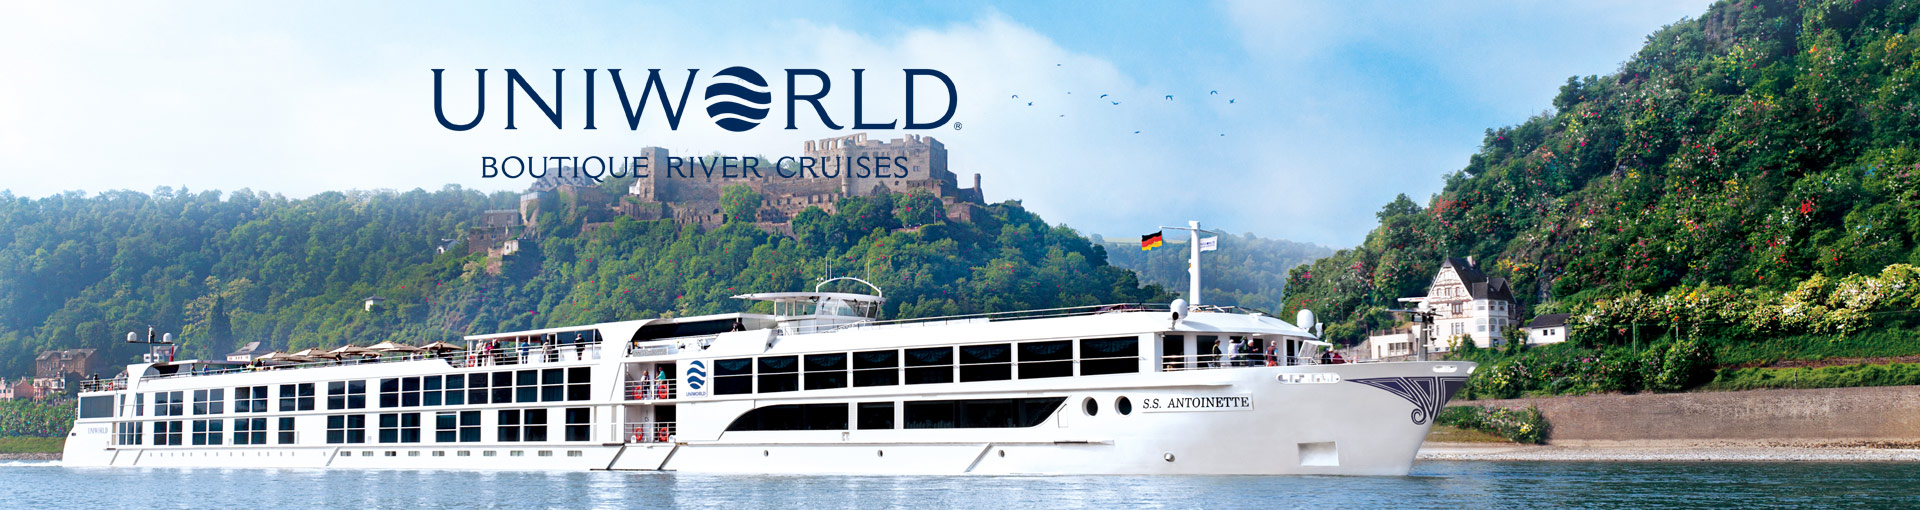 uniworld river cruises agent login